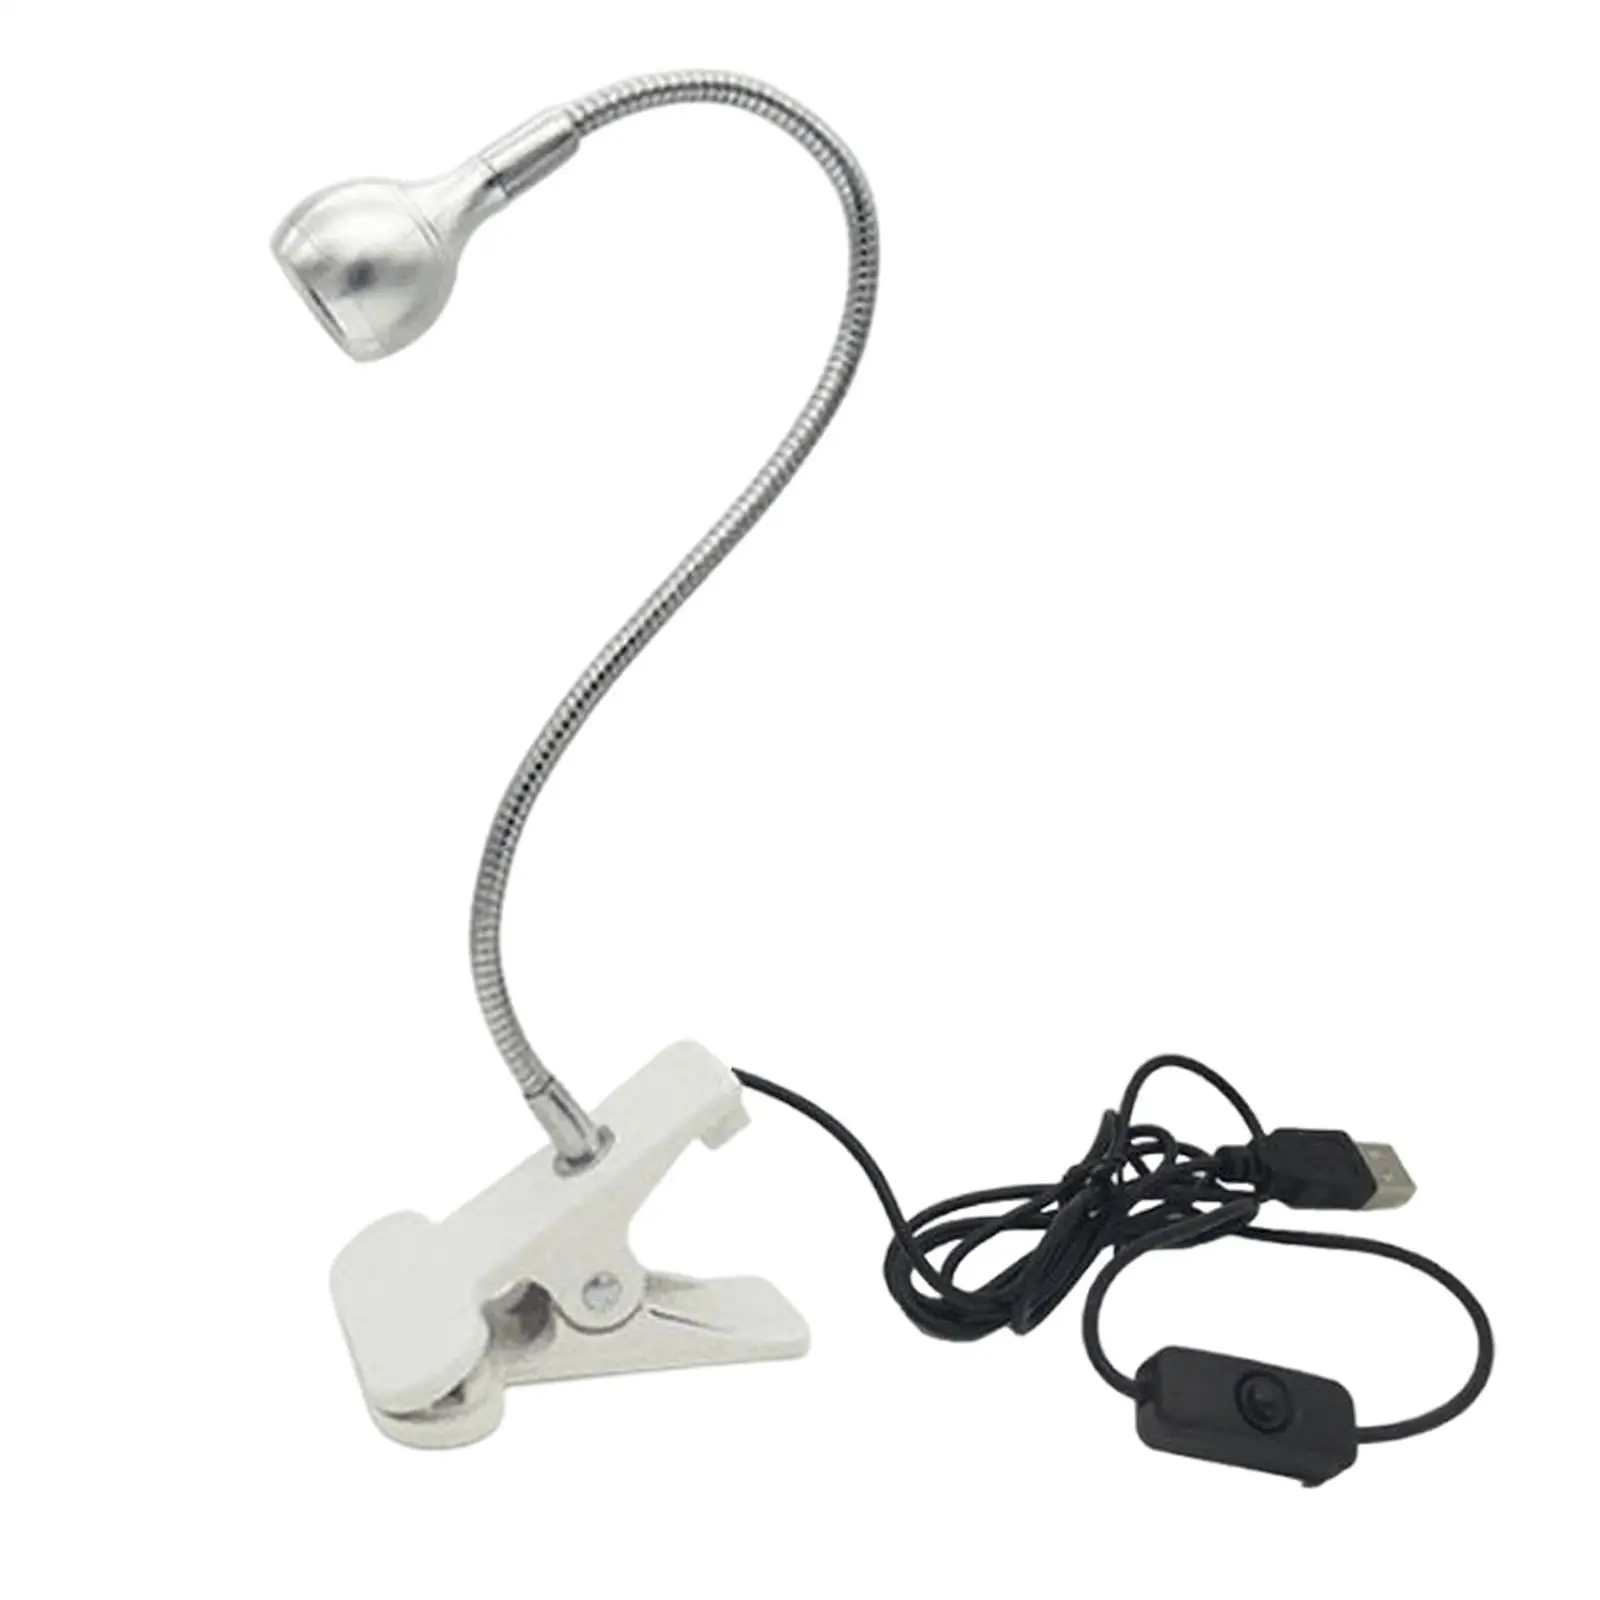 LED Nail Dryer Lamp Nail Epuipment Tools Portable Nail Polish Curing Lamp for All Gels Manicure Pedicure Drying Nails